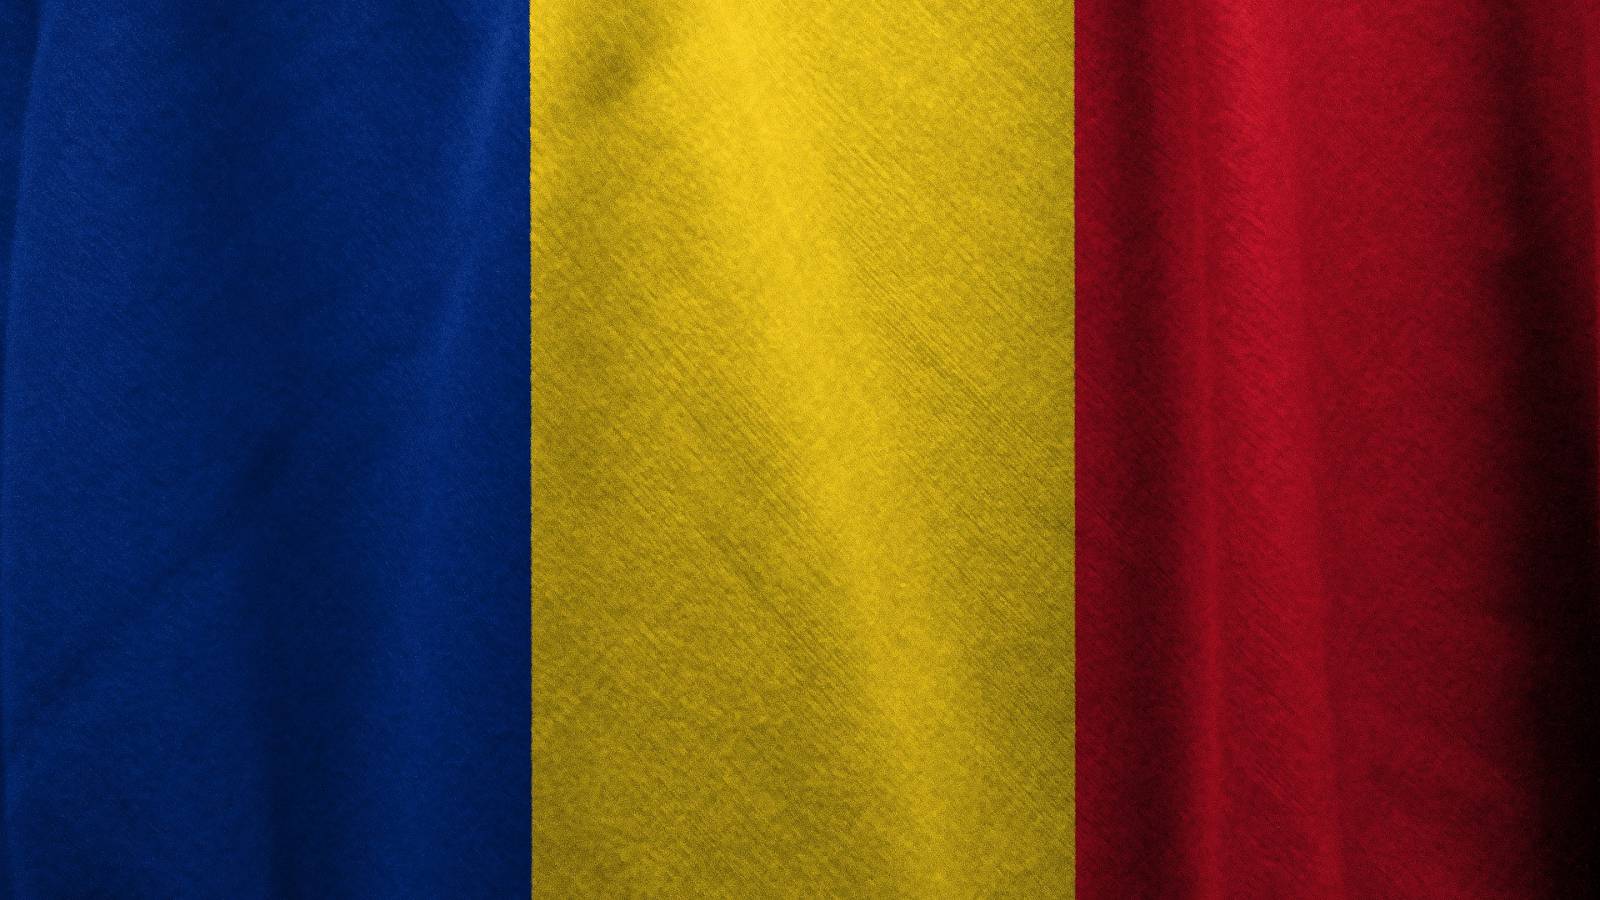 Neuer Tag ohne Todesfälle durch COVID-19 Rumänien